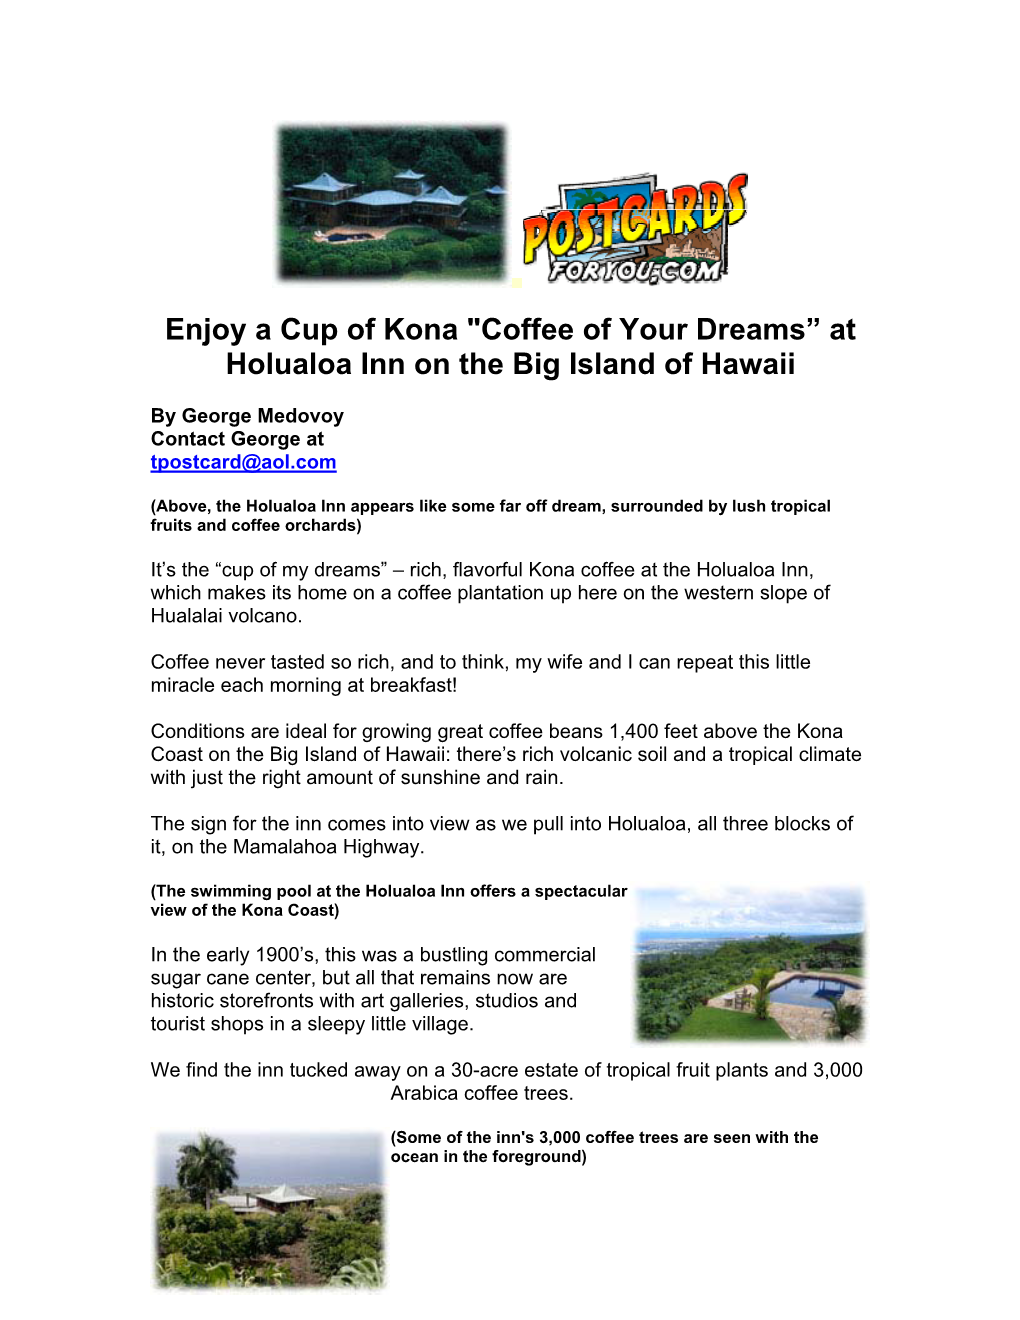 Coffee of Your Dreams” at Holualoa Inn on the Big Island of Hawaii